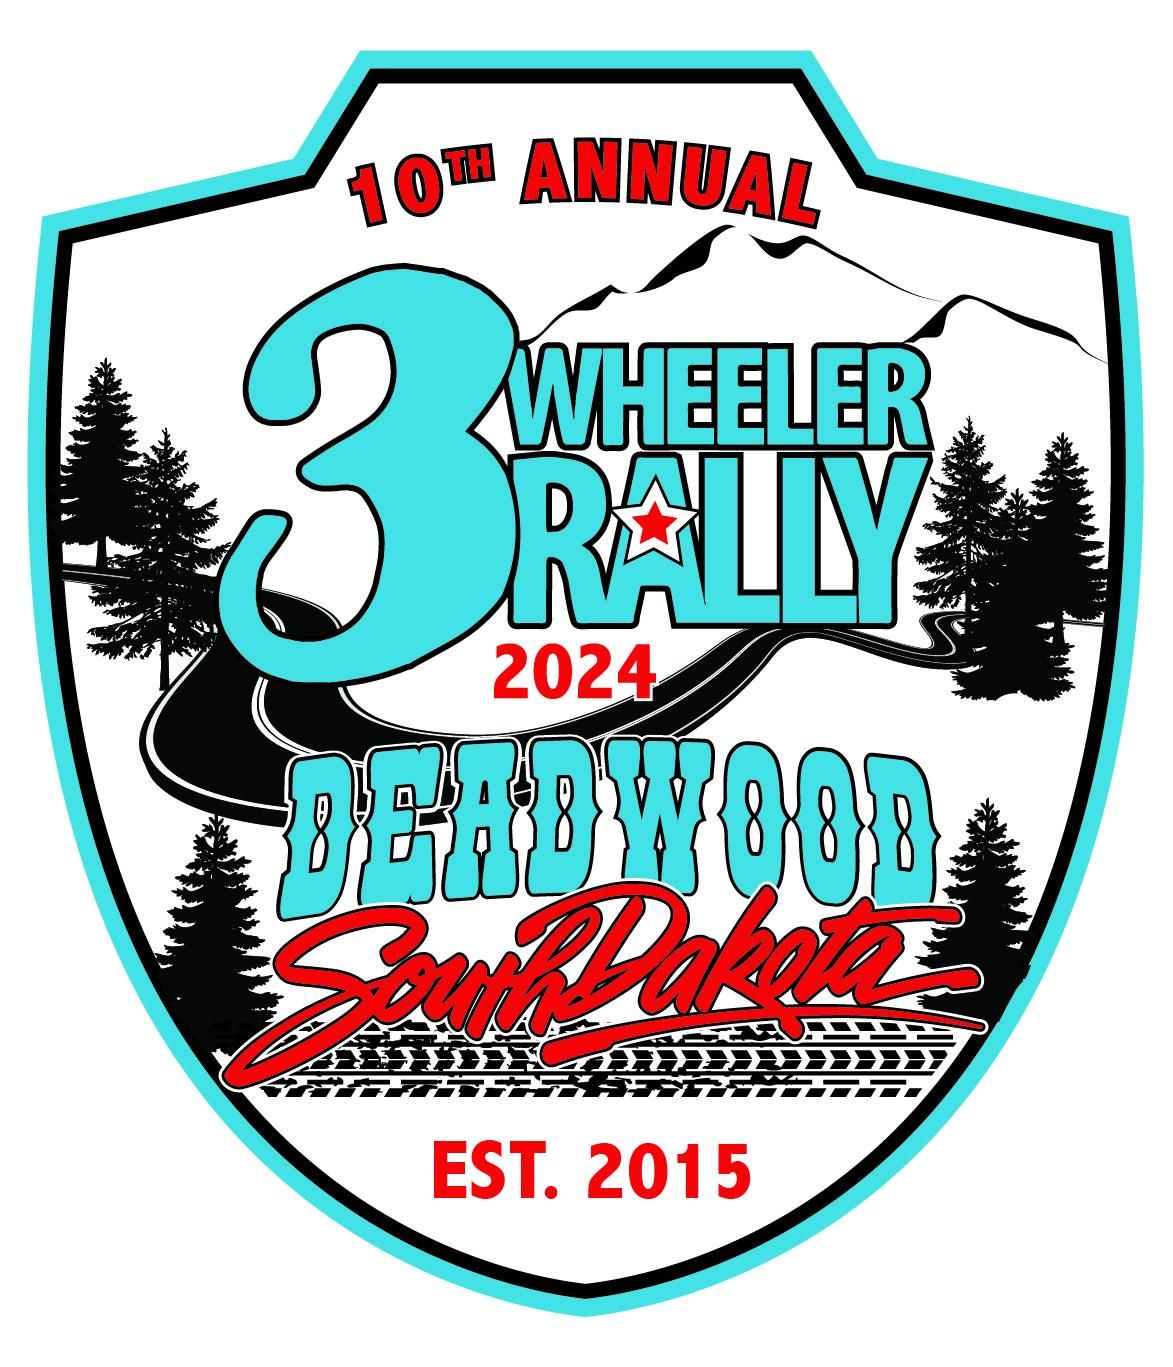 10th Annual Deadwood 3 Wheeler Rally